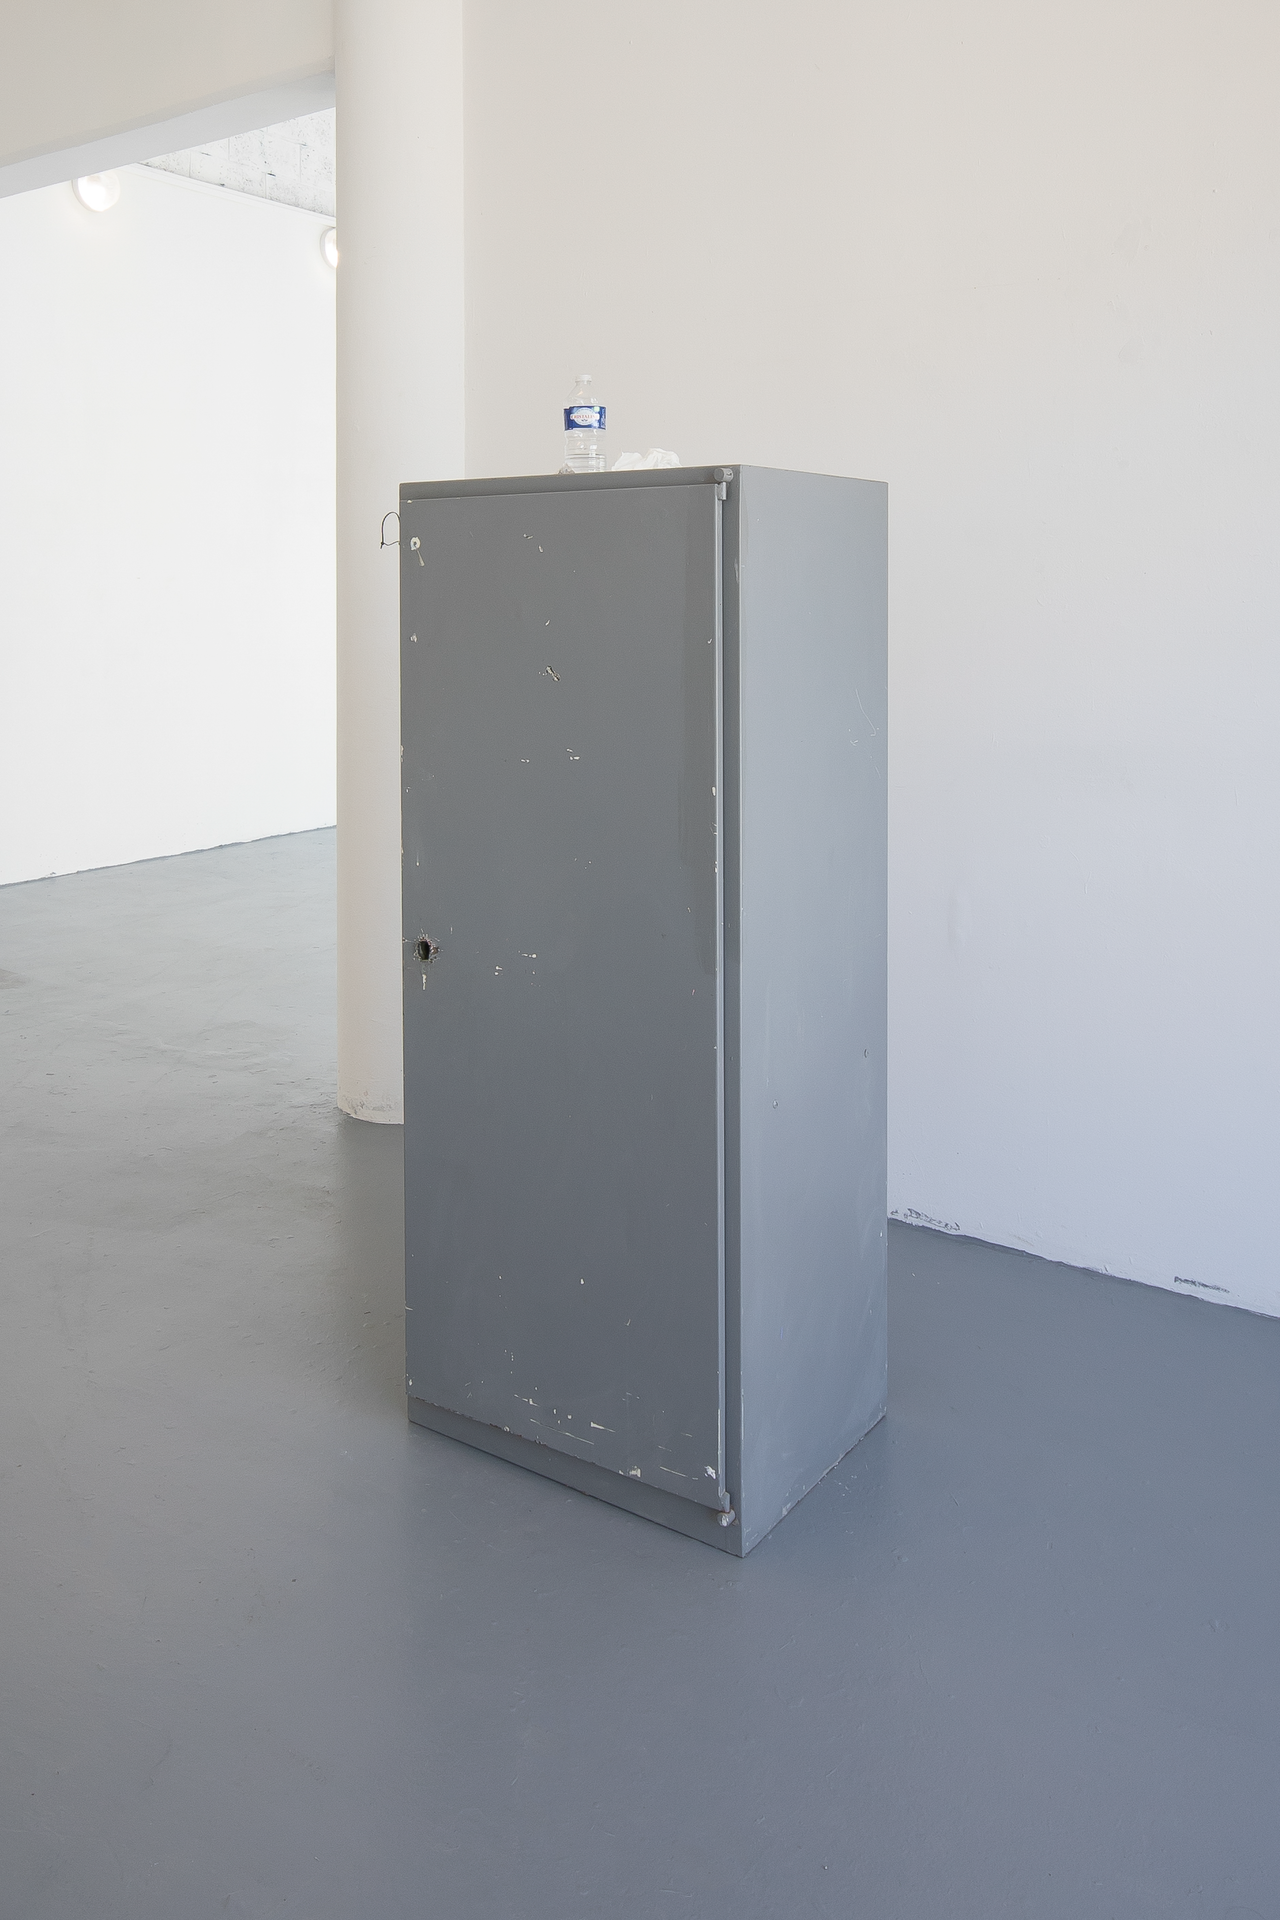 Hugo Bausch Belbachir, Untitled (Cabinet), Metal cabinet, water bottle, tissues, paper, 146 x 60 x 45 cm, 57 1/2 x 23 5/8 x 17 3/4 inches.